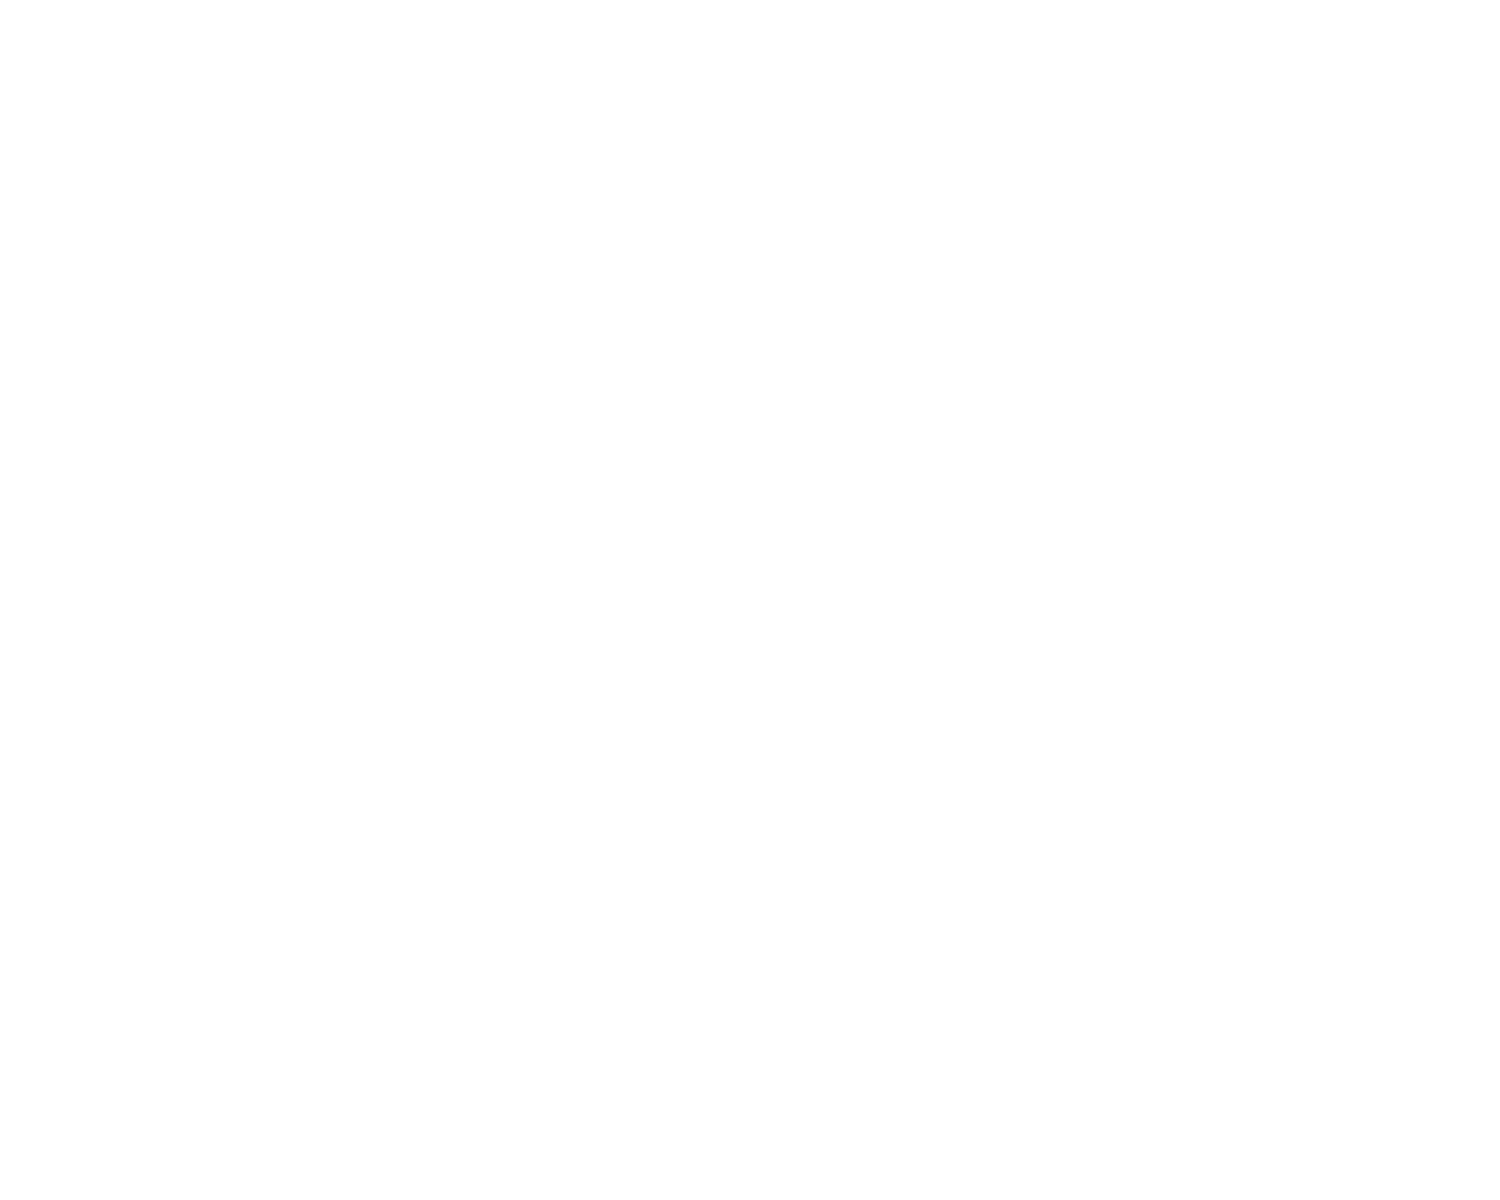 DC Bodywork